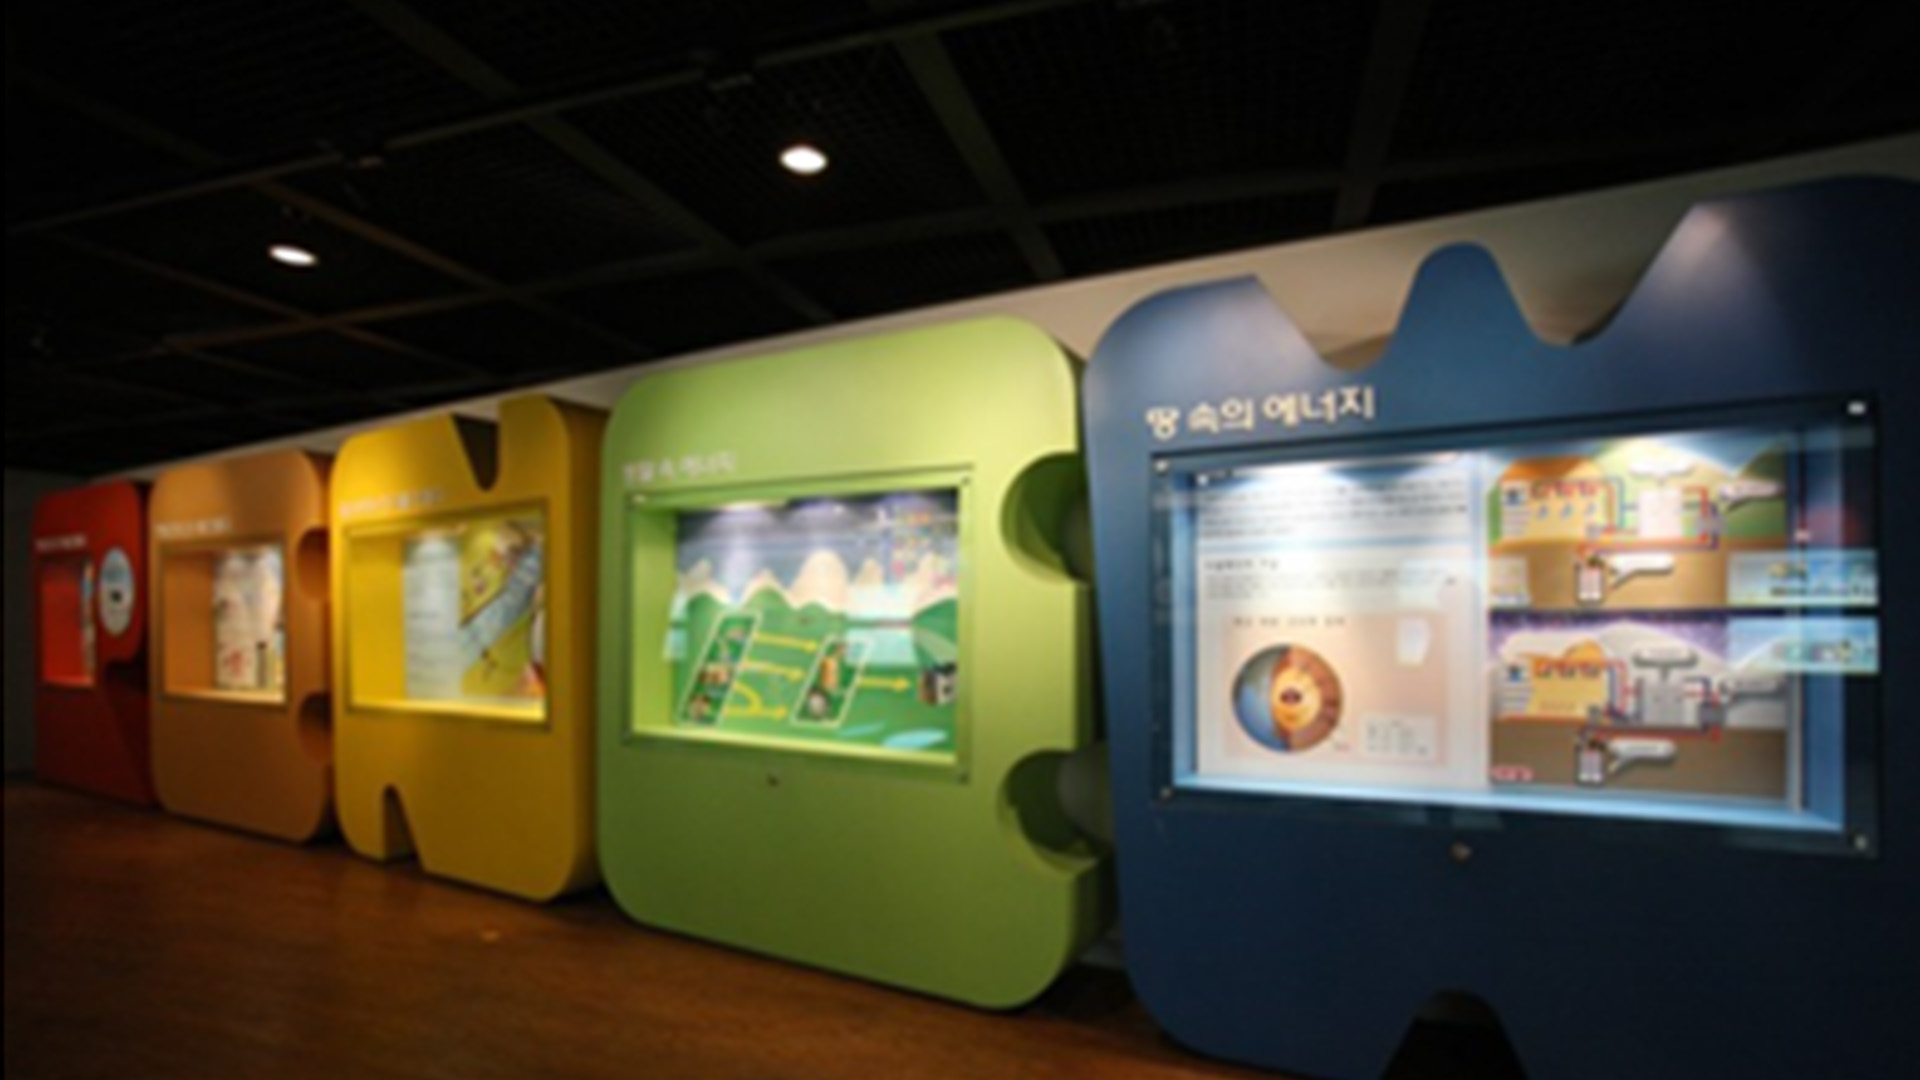 Seoul Eco Energy Science Park South Korea